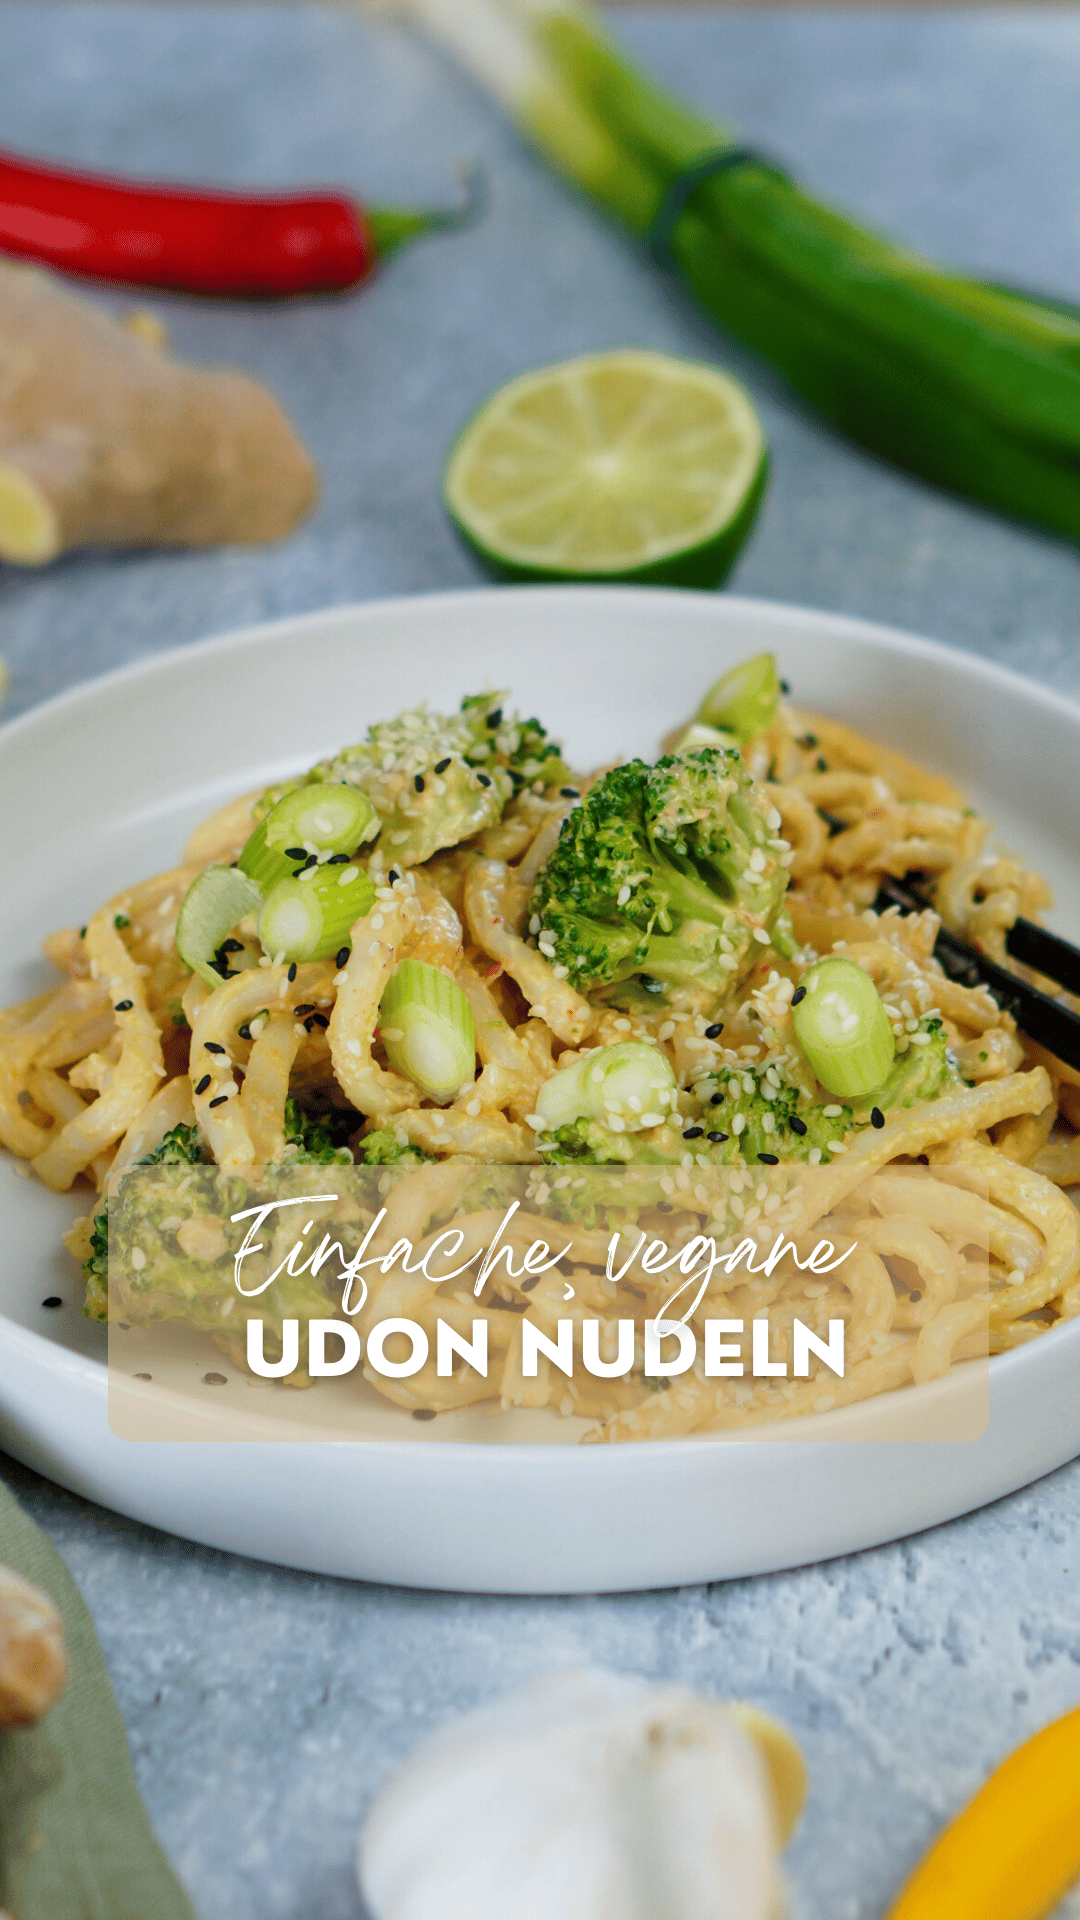 Udon Nudeln vegan mit Erdnuss-Soße